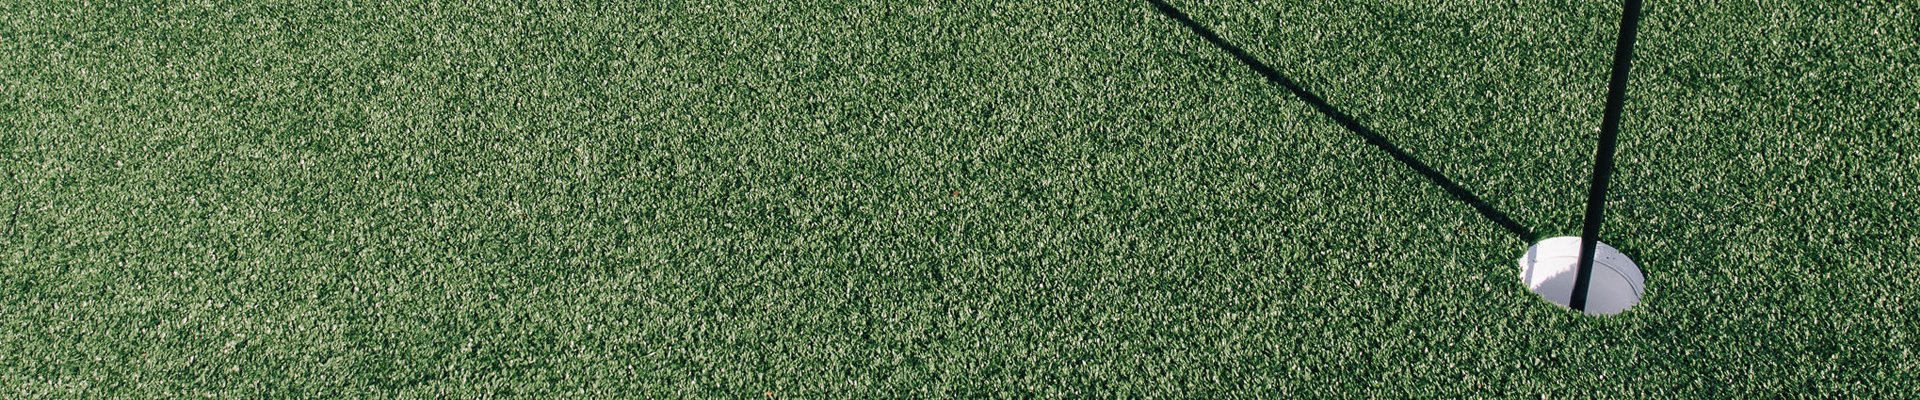 Artificial grass golf courses